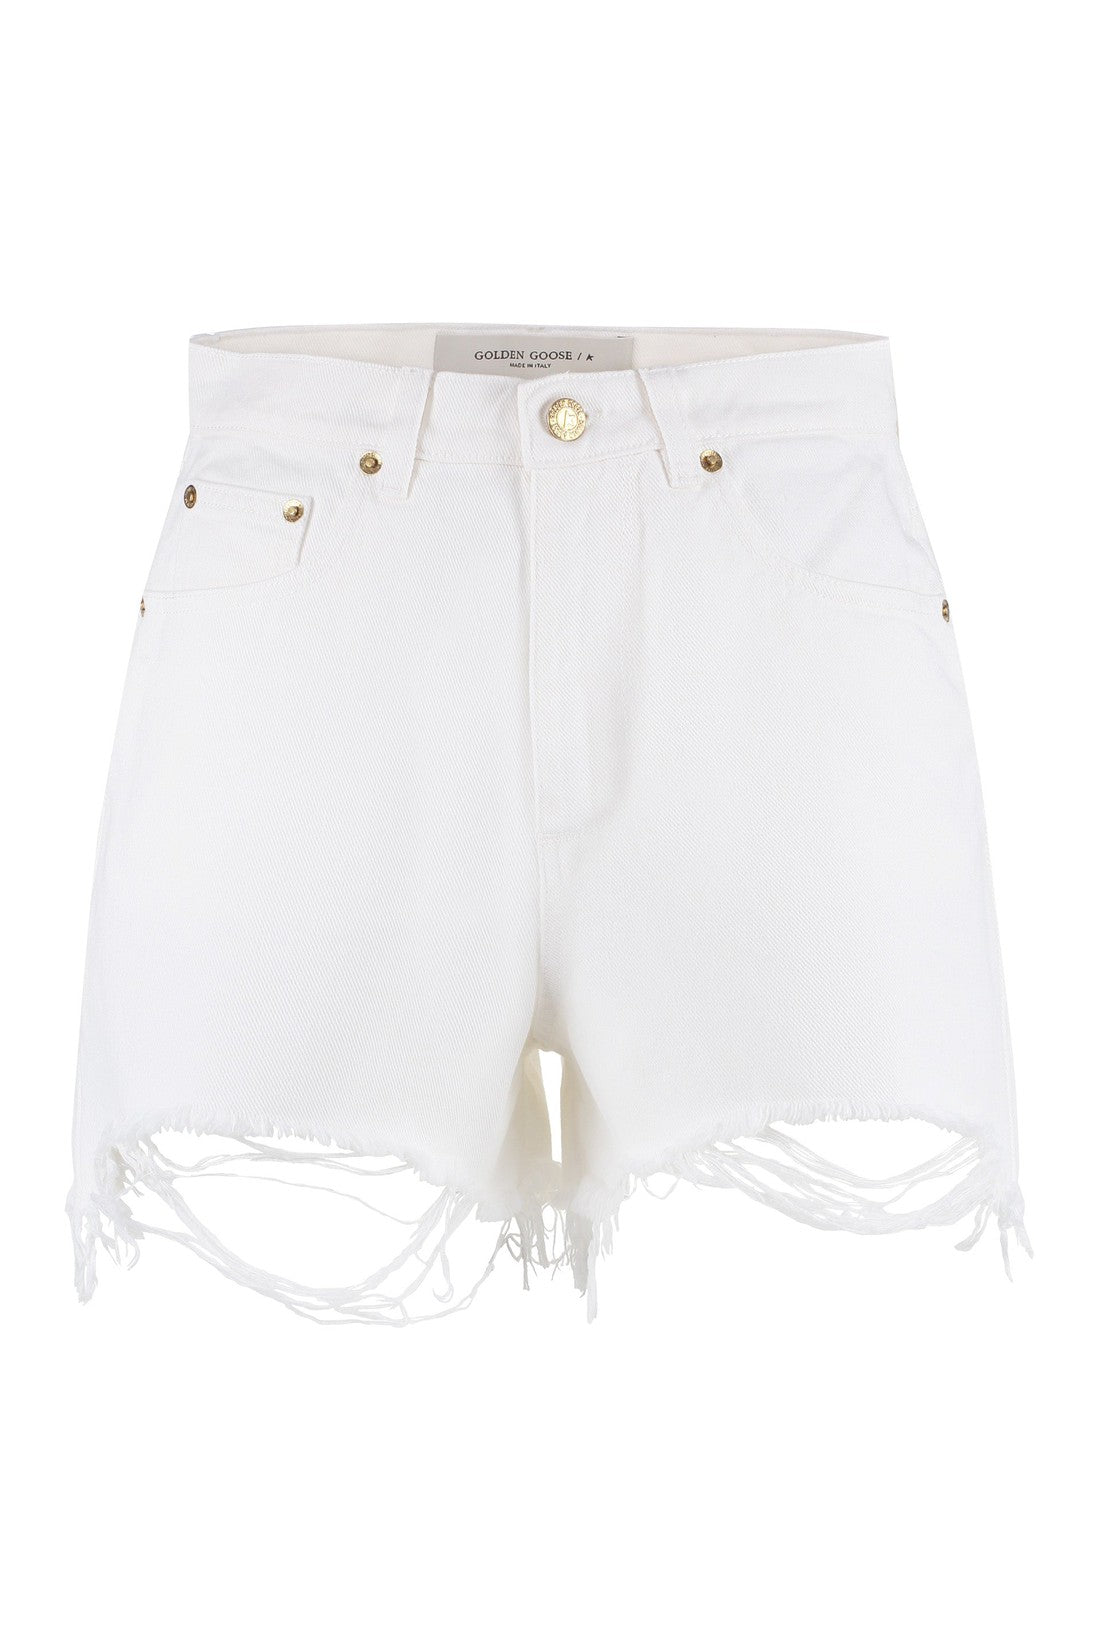 Golden Goose-OUTLET-SALE-Denim shorts-ARCHIVIST